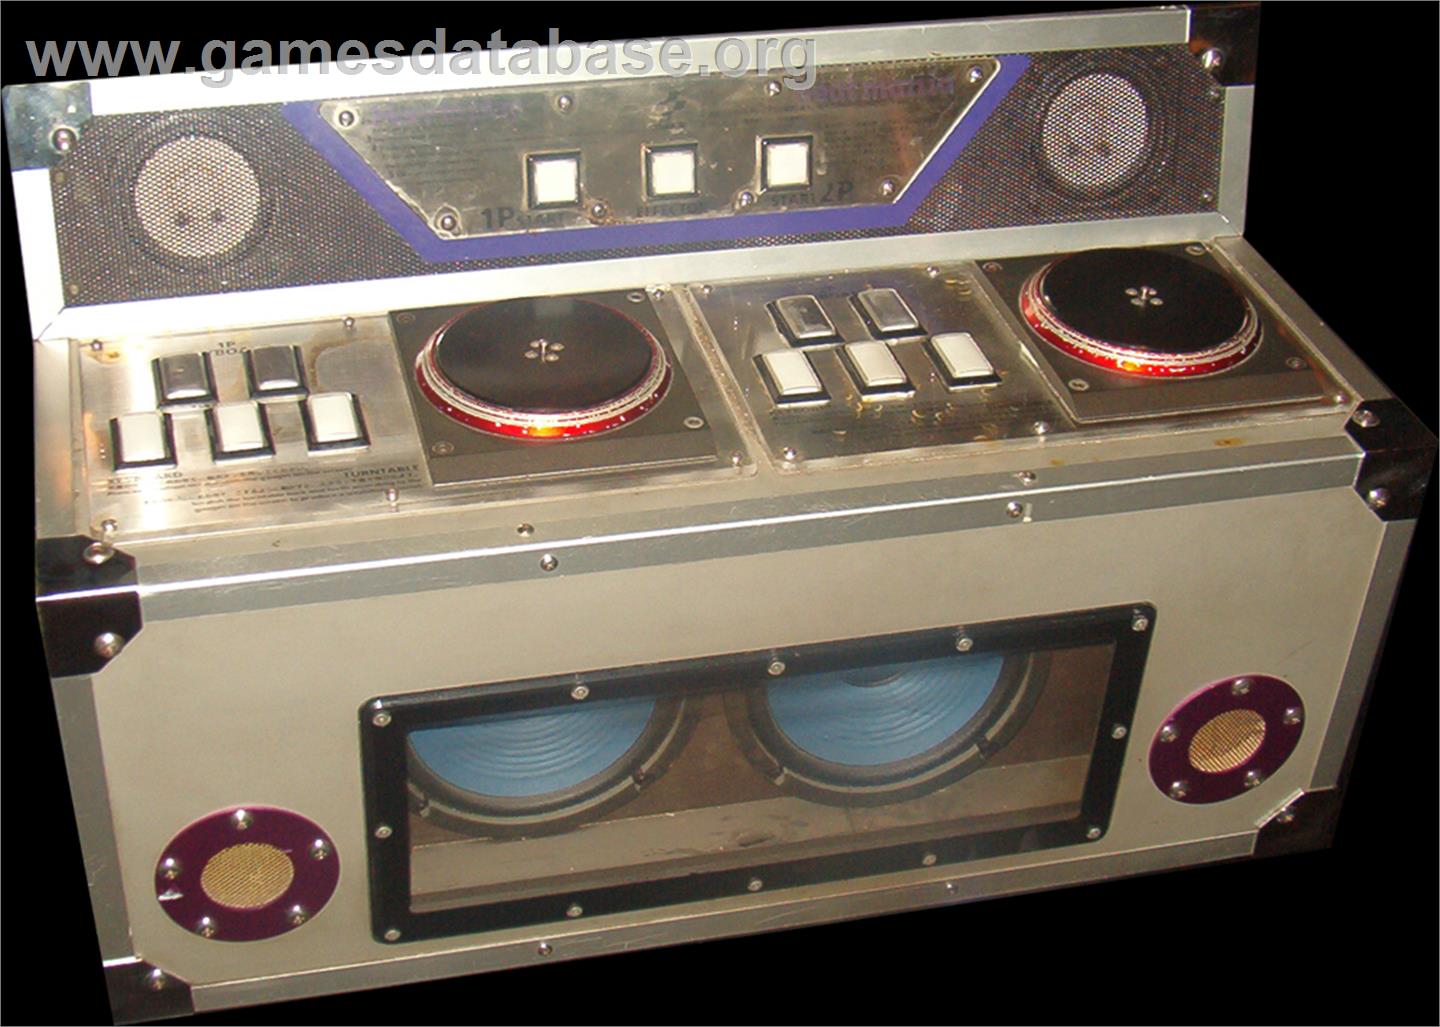 beatmania 5th MIX - Arcade - Artwork - Control Panel